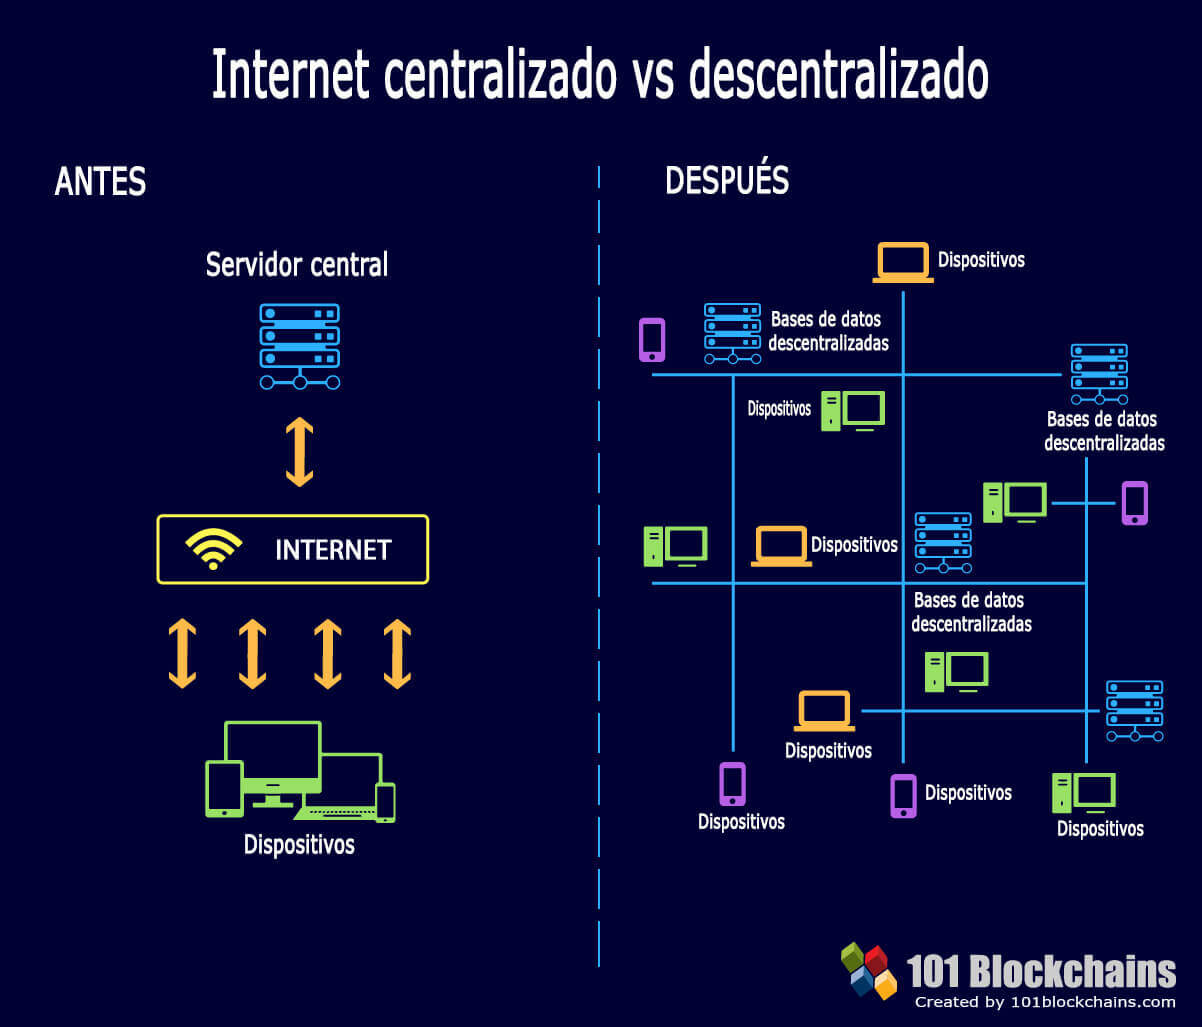 Internet centralizado vs descentralizado